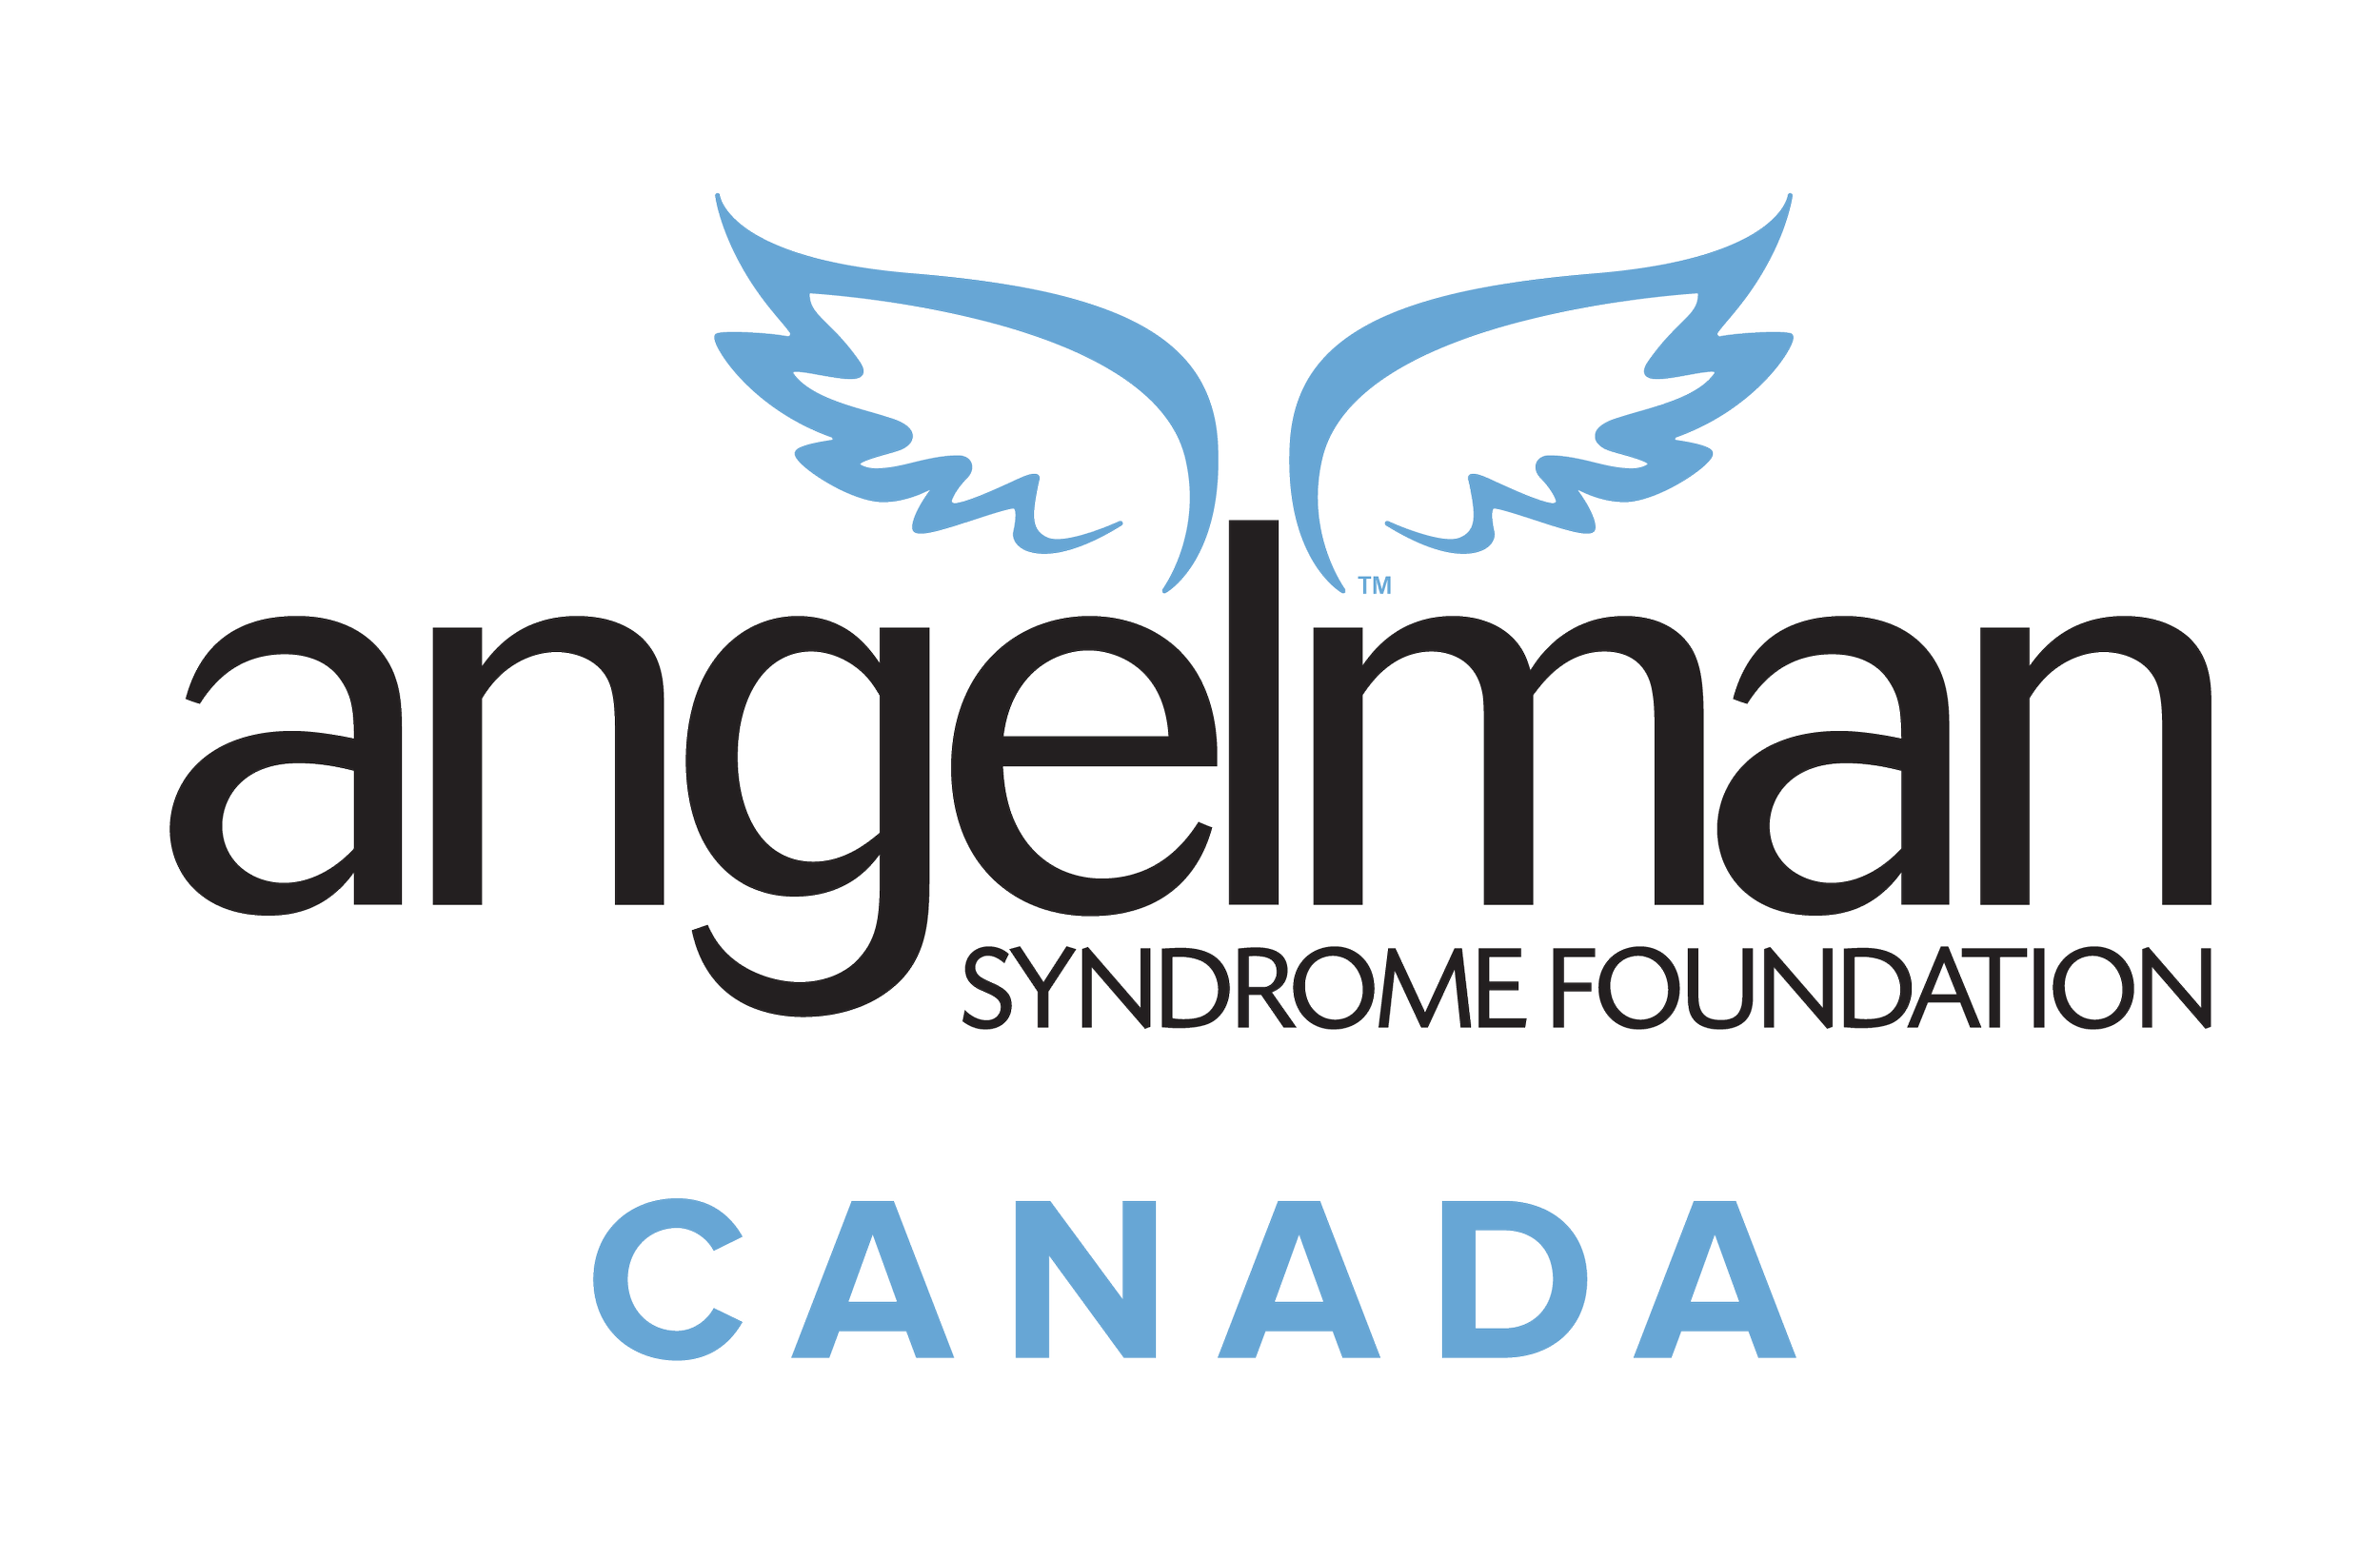 Angelman Syndrome Foundation Canada